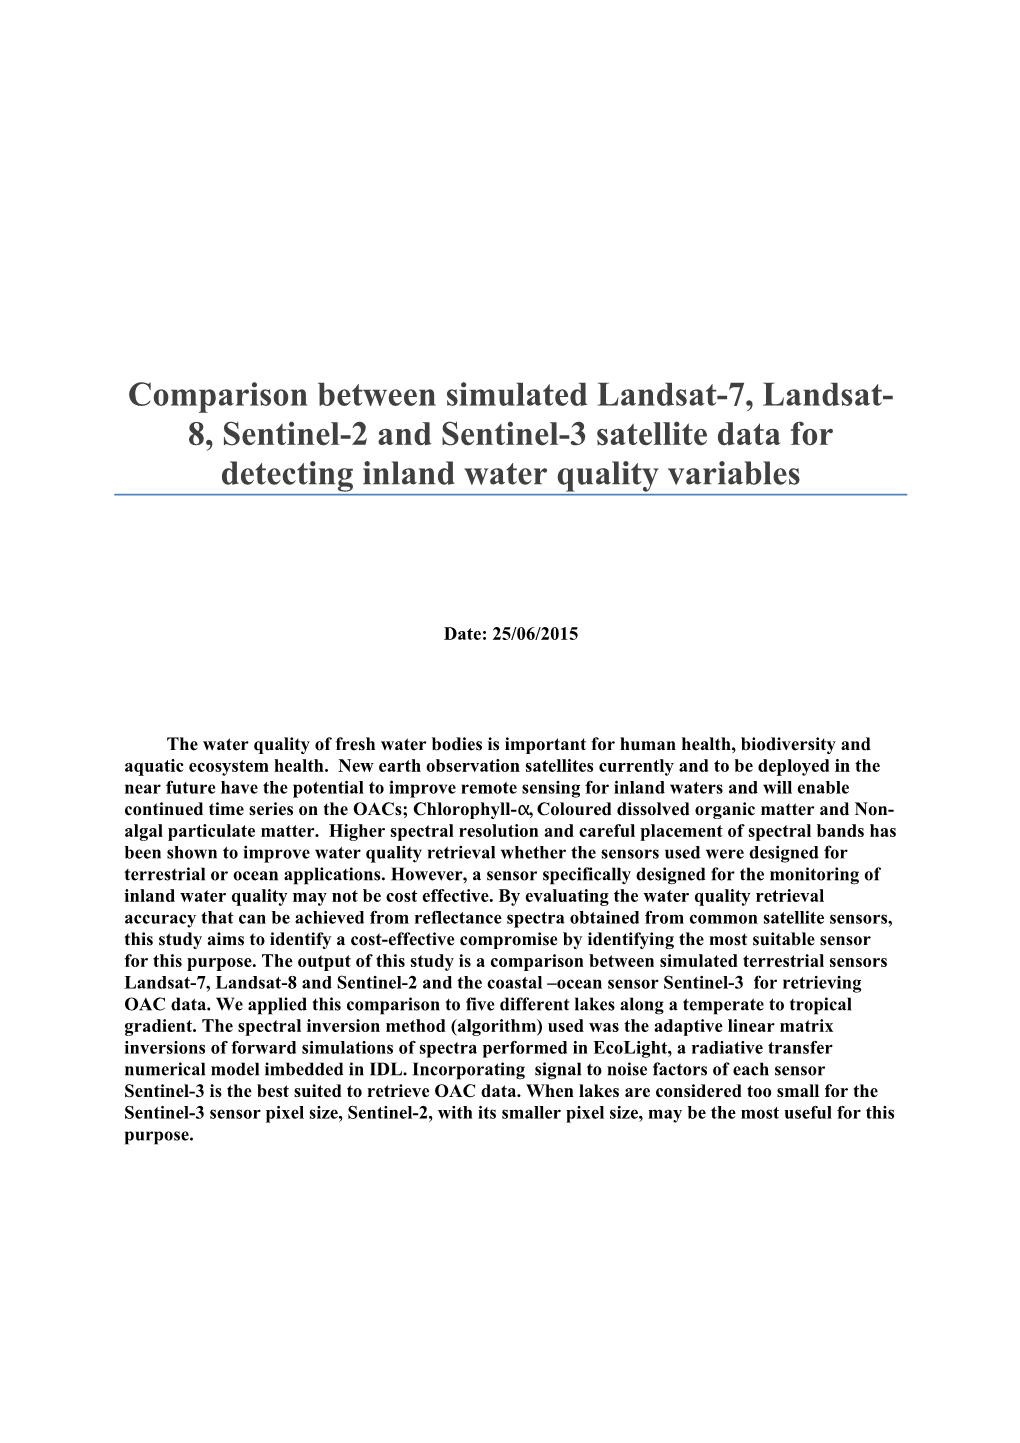 Comparison Between Simulated Landsat-7, Landsat-8, Sentinel-2 and Sentinel-3 Satellite